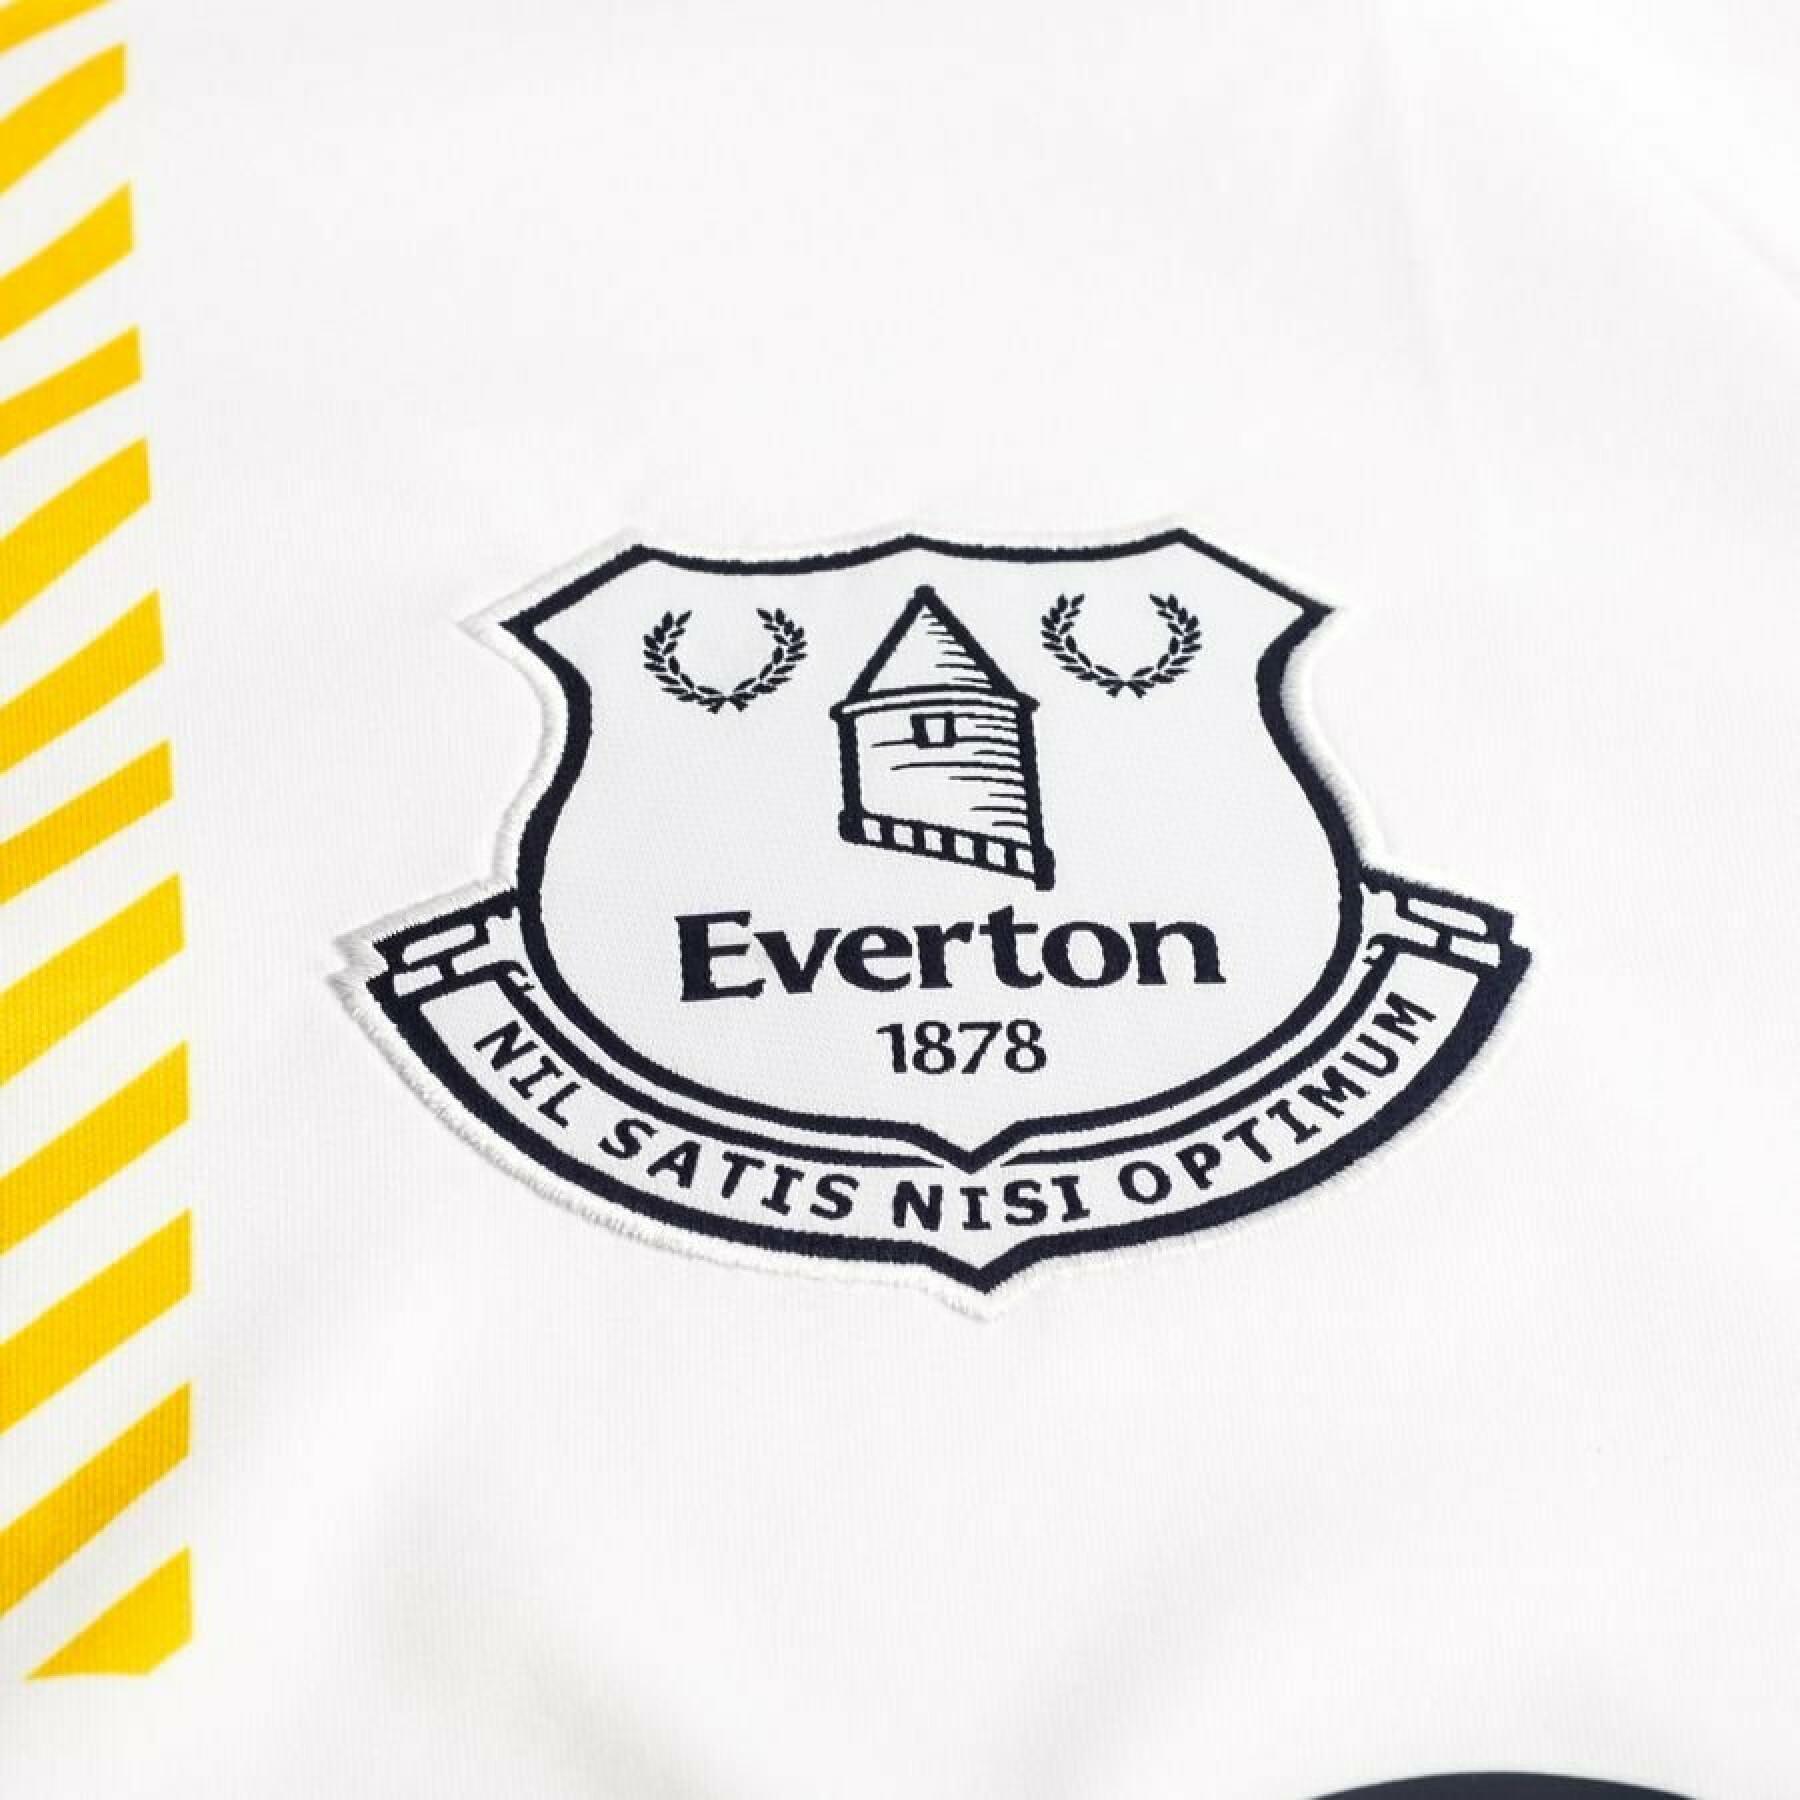 Terceira camisola Everton 2021/22